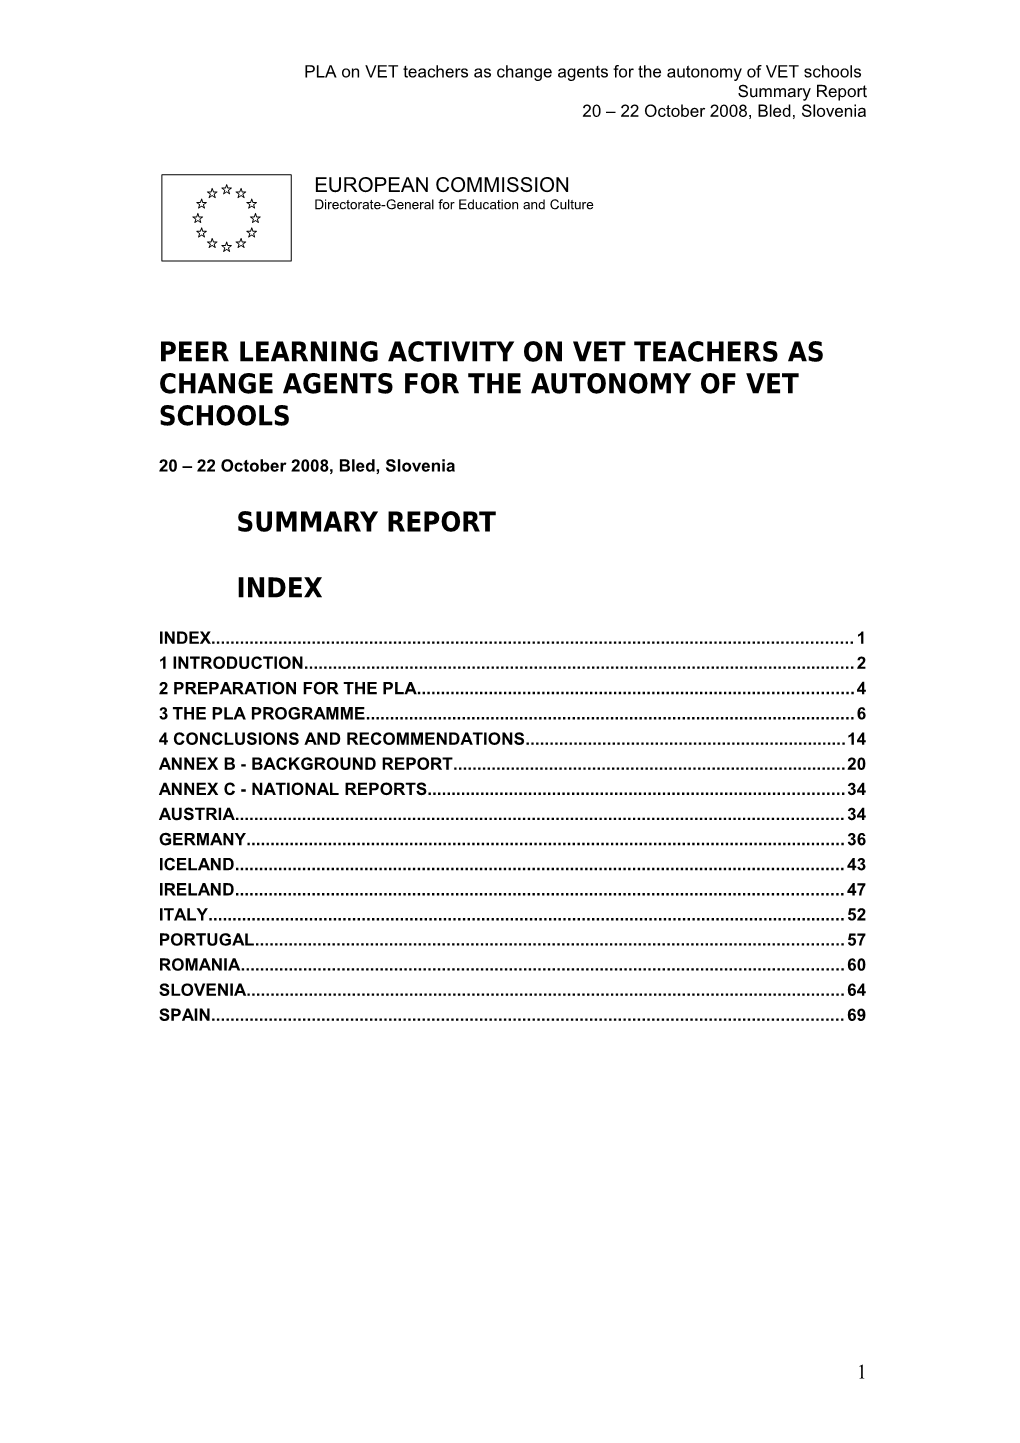 PLA on VET Teachers As Change Agents for the Autonomy of VET Schools